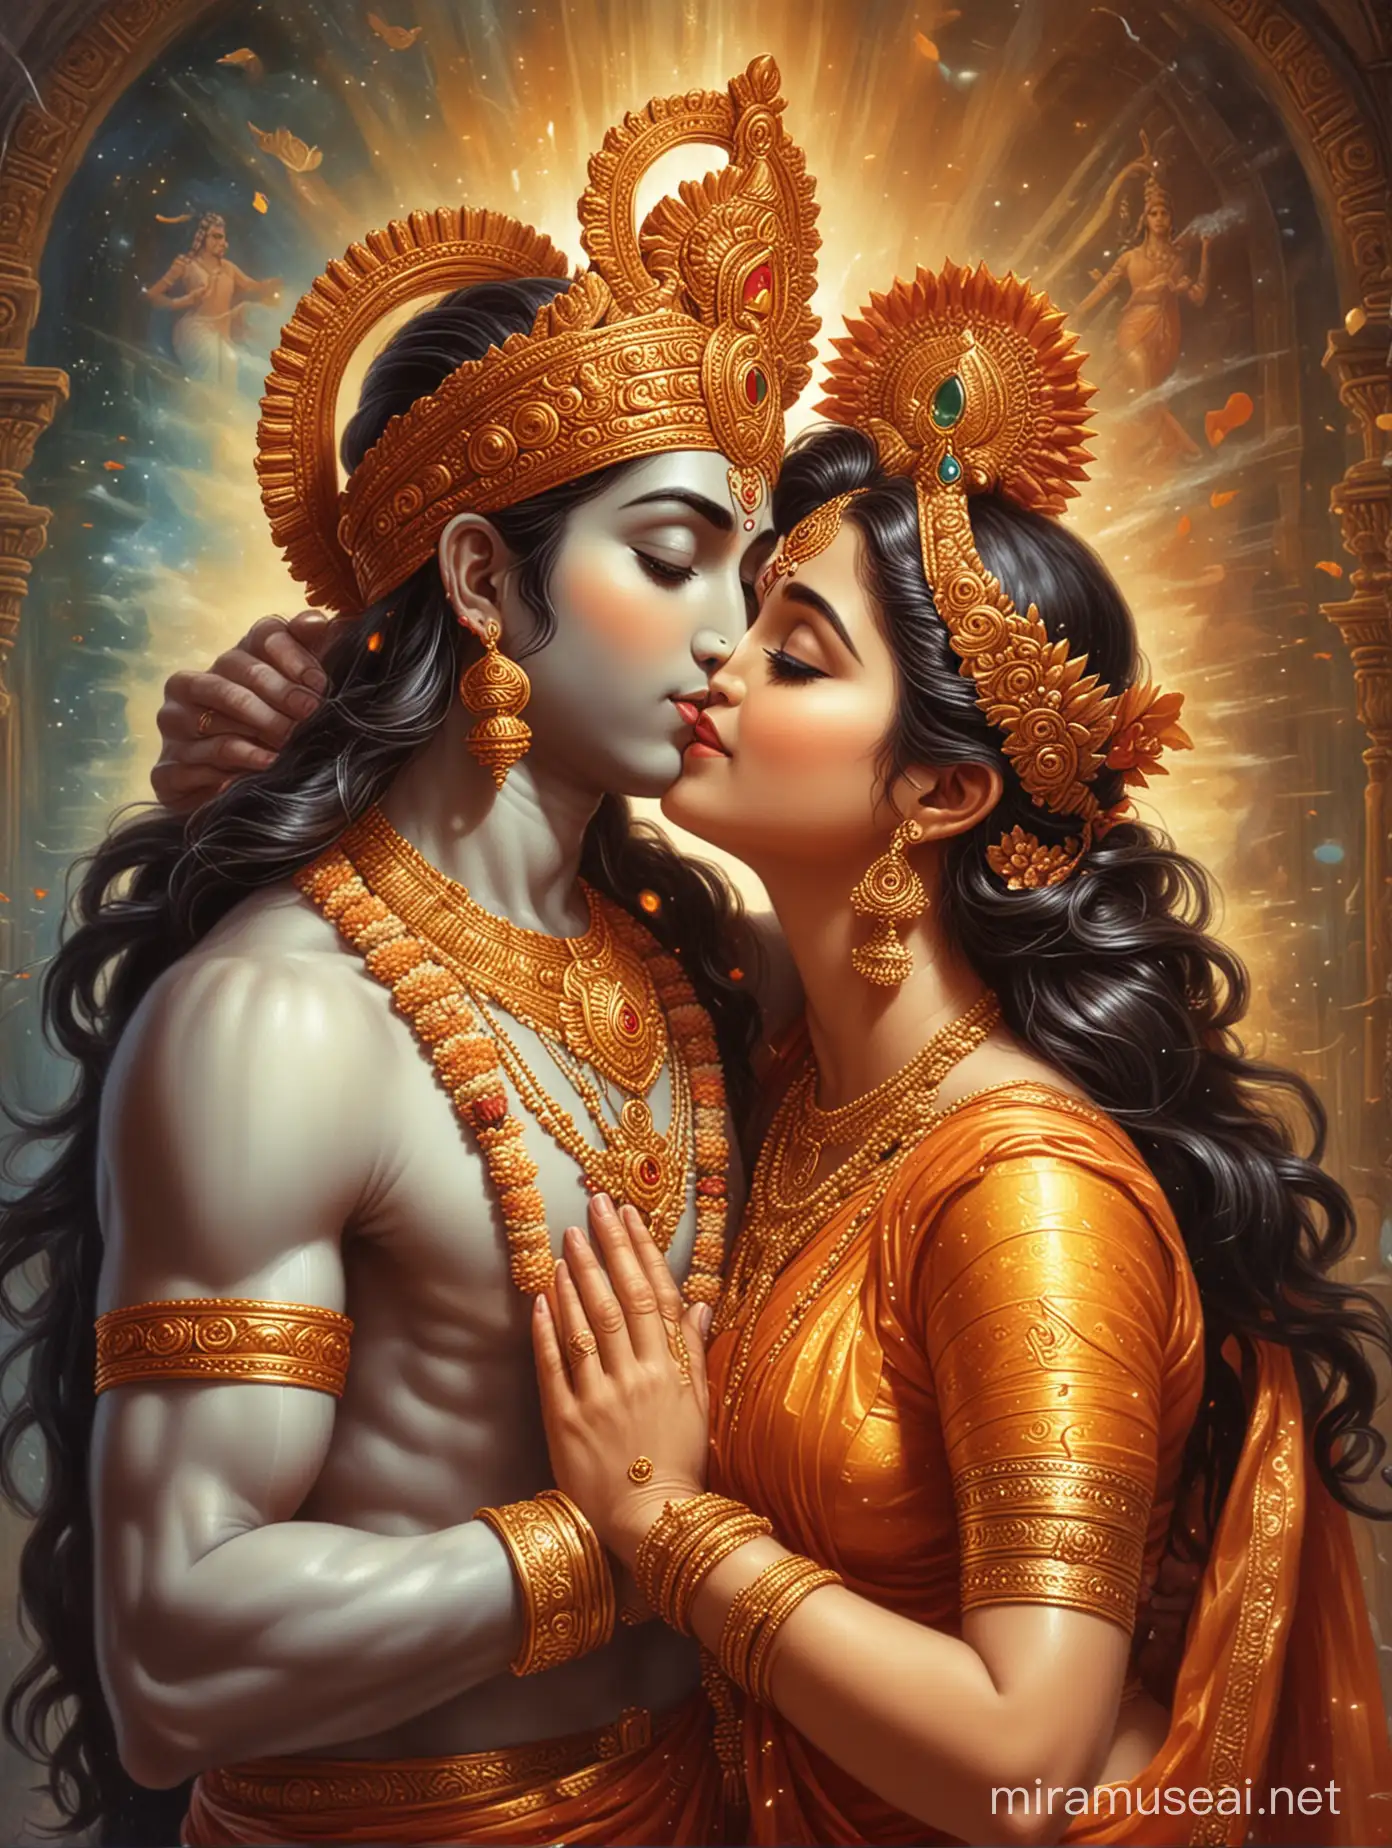 Hindu God Tenderly Kisses Hindu Goddess in Divine Embrace